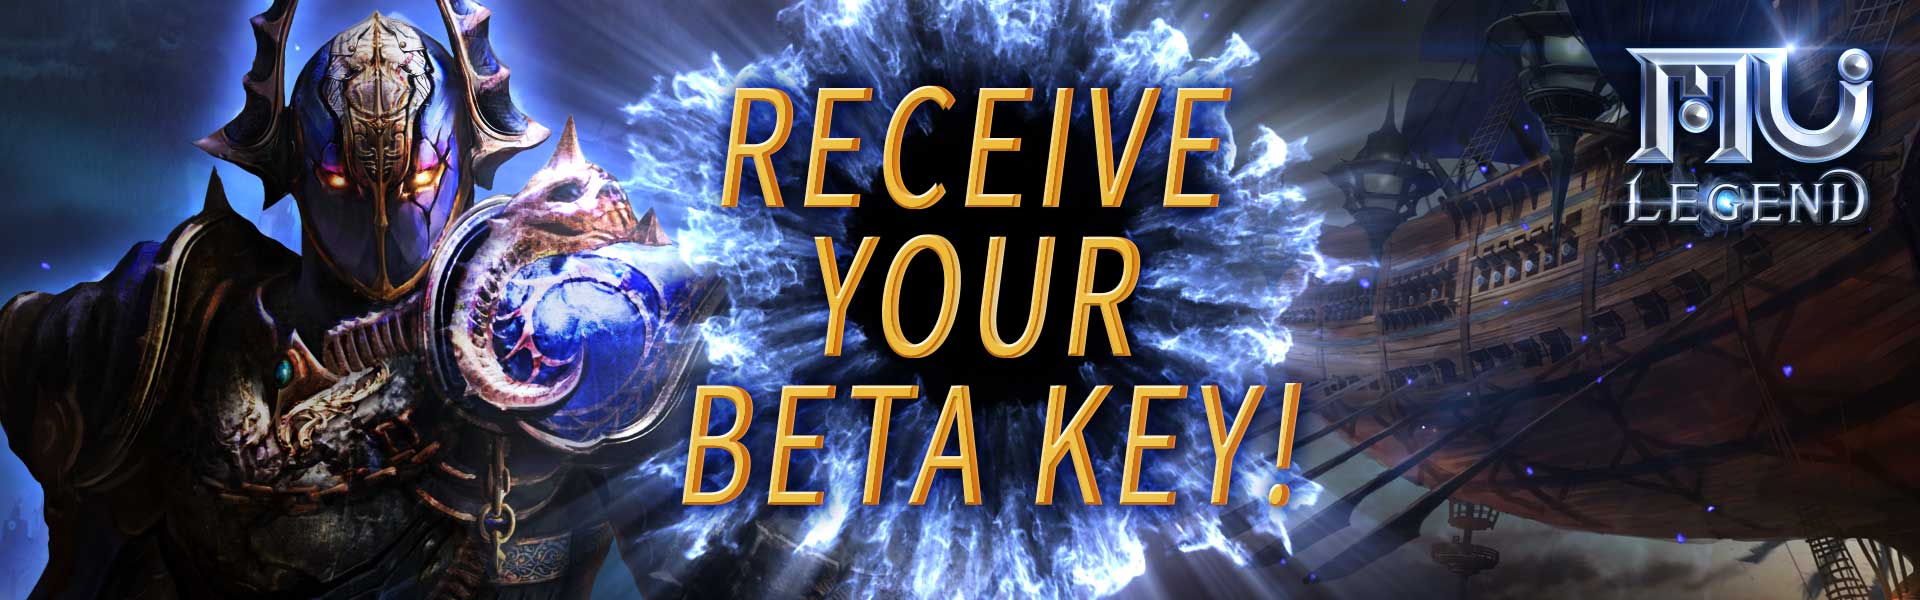 MU Legend's 2nd Beta Key Giveaway 9